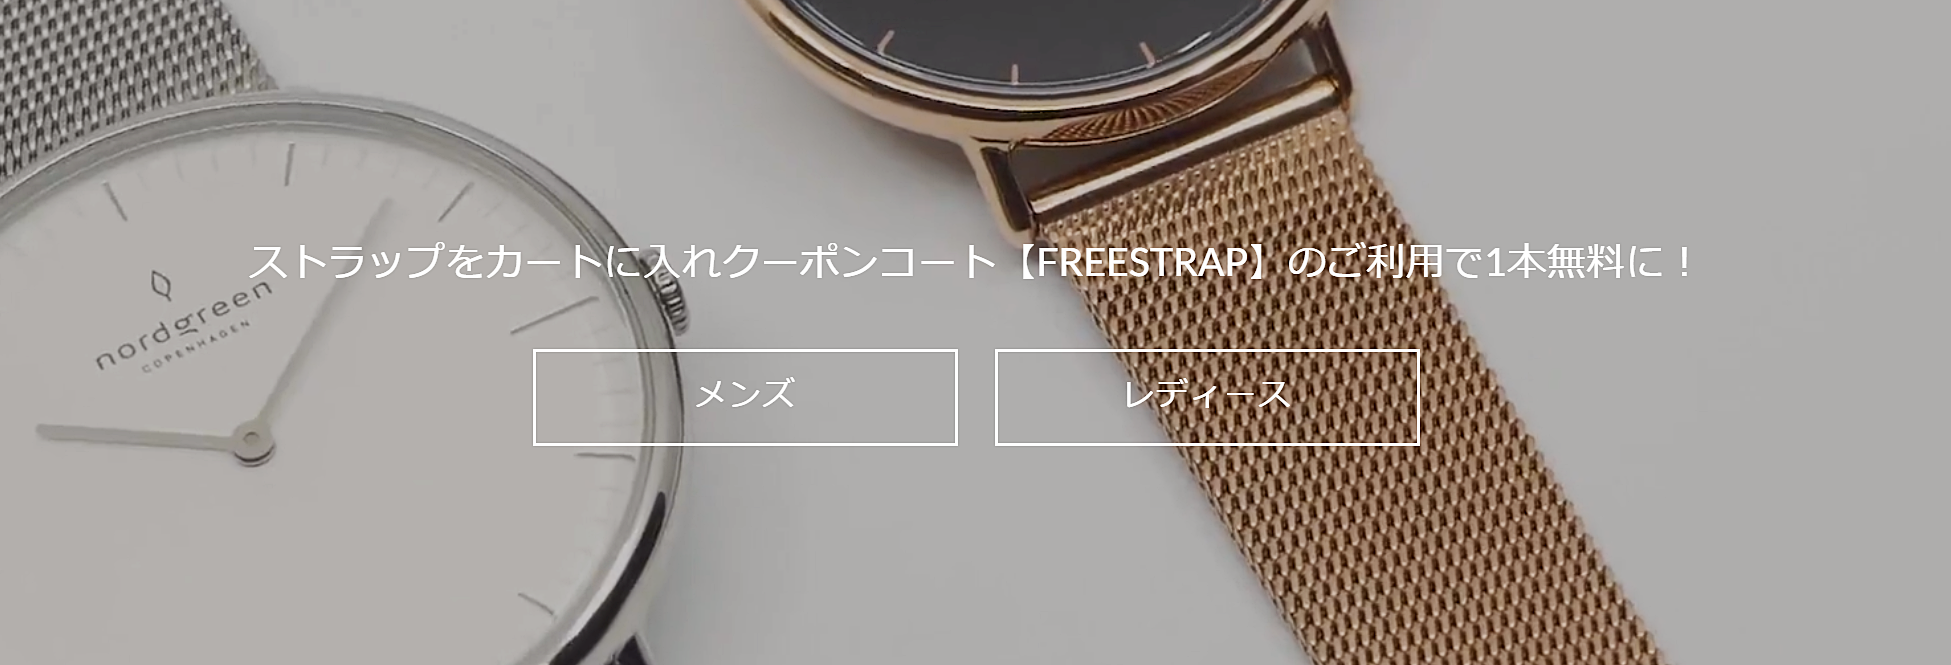 Nordgreen ノードグリーン 腕時計 追加ストラップ FREESTRAP ご利用で1本無料